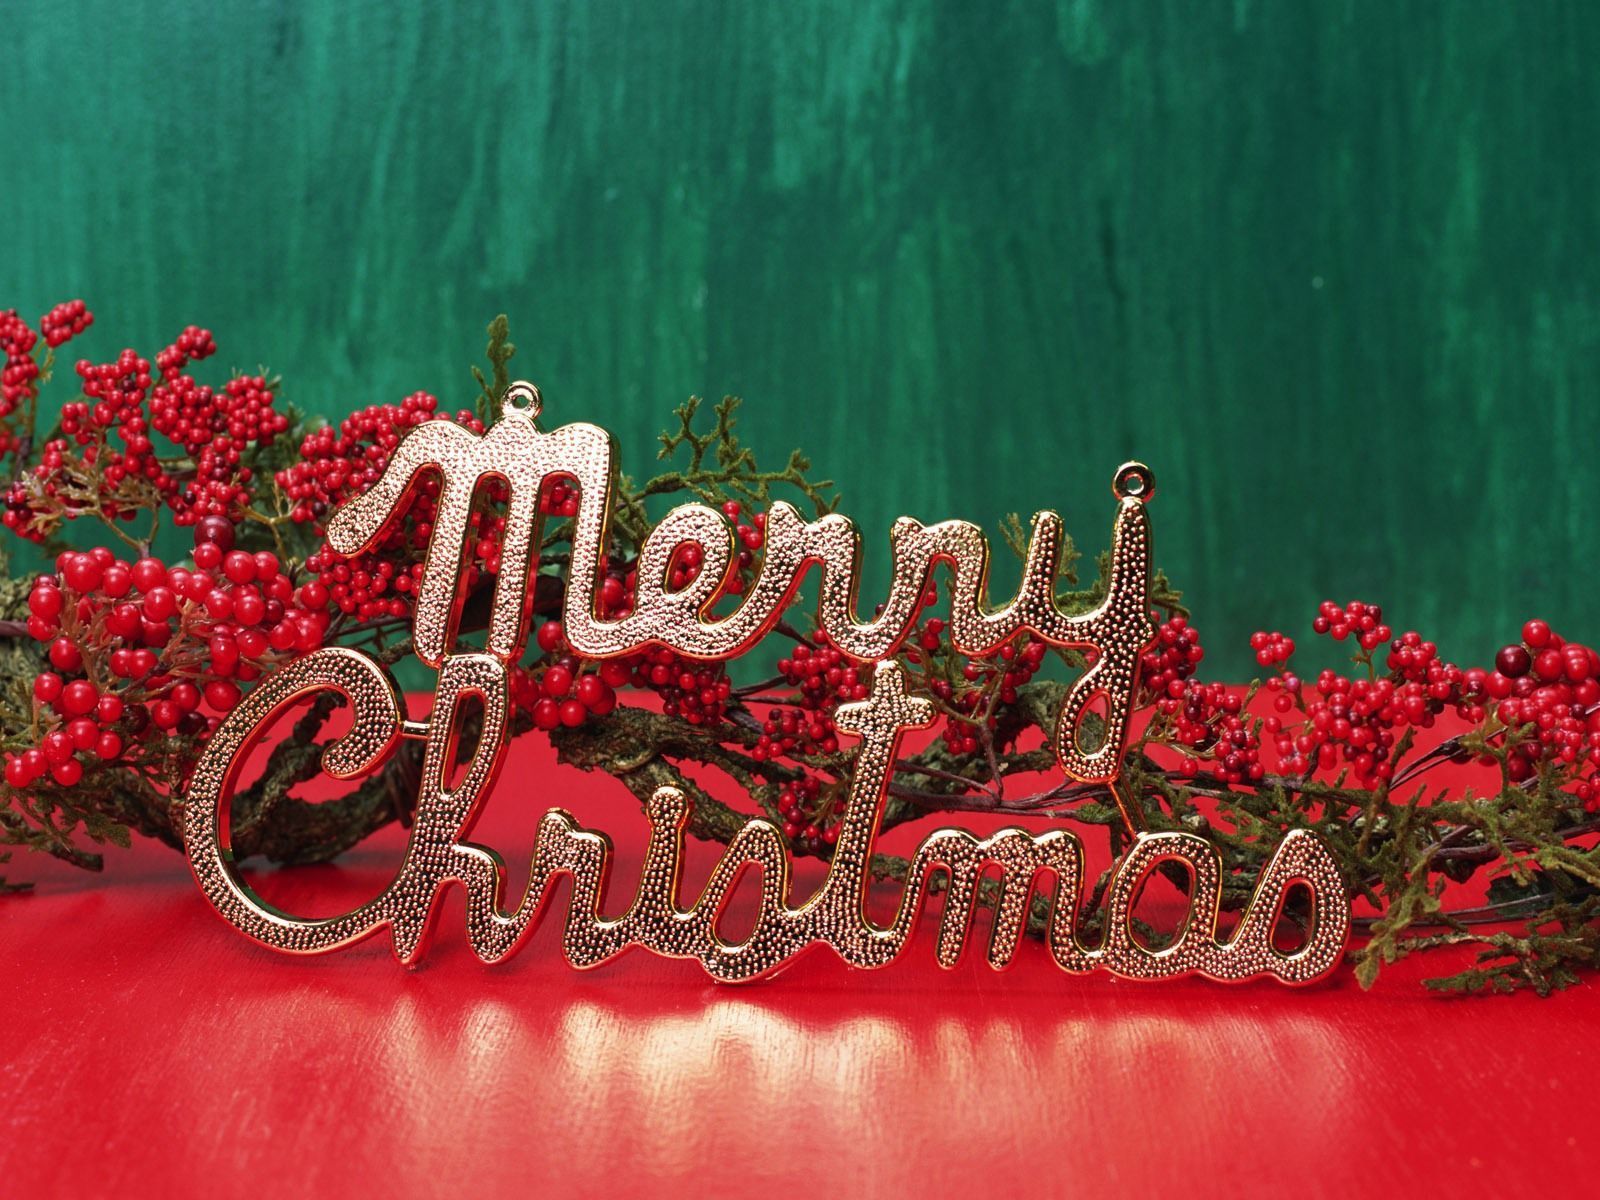 2015 merry Christmas desktop wallpaper - images, photos, pictures ...